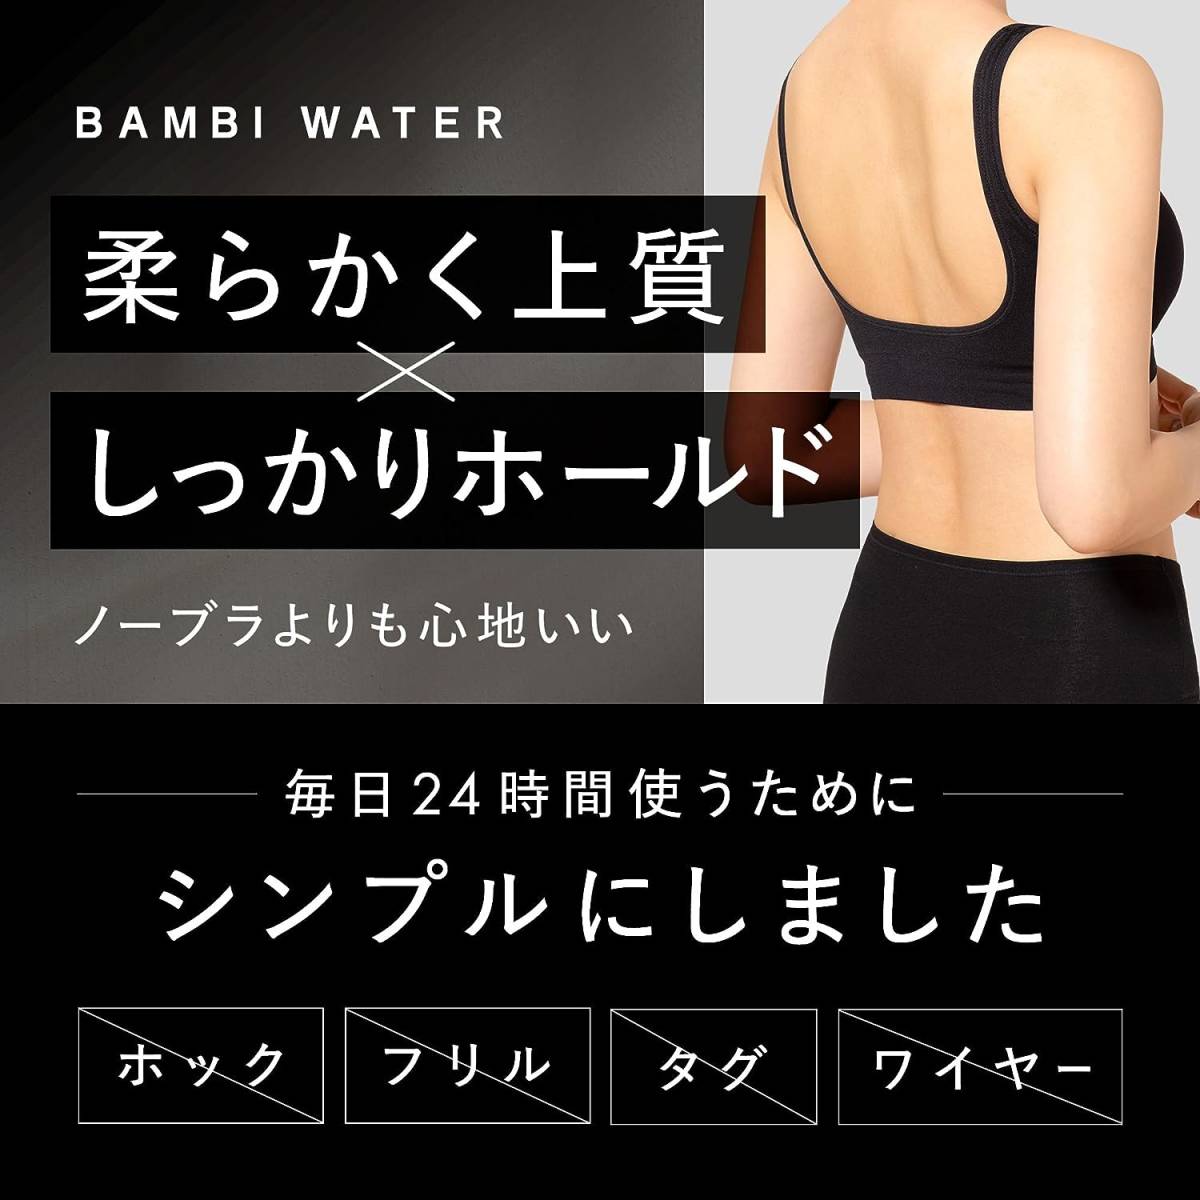 BAMBI WATER スタイルナイトブラＵバック バックオープン 背中開き 美胸ブラ 24時間 昼夜兼用 ナイトブラ ブラジャー (ブラック,XS)_画像3